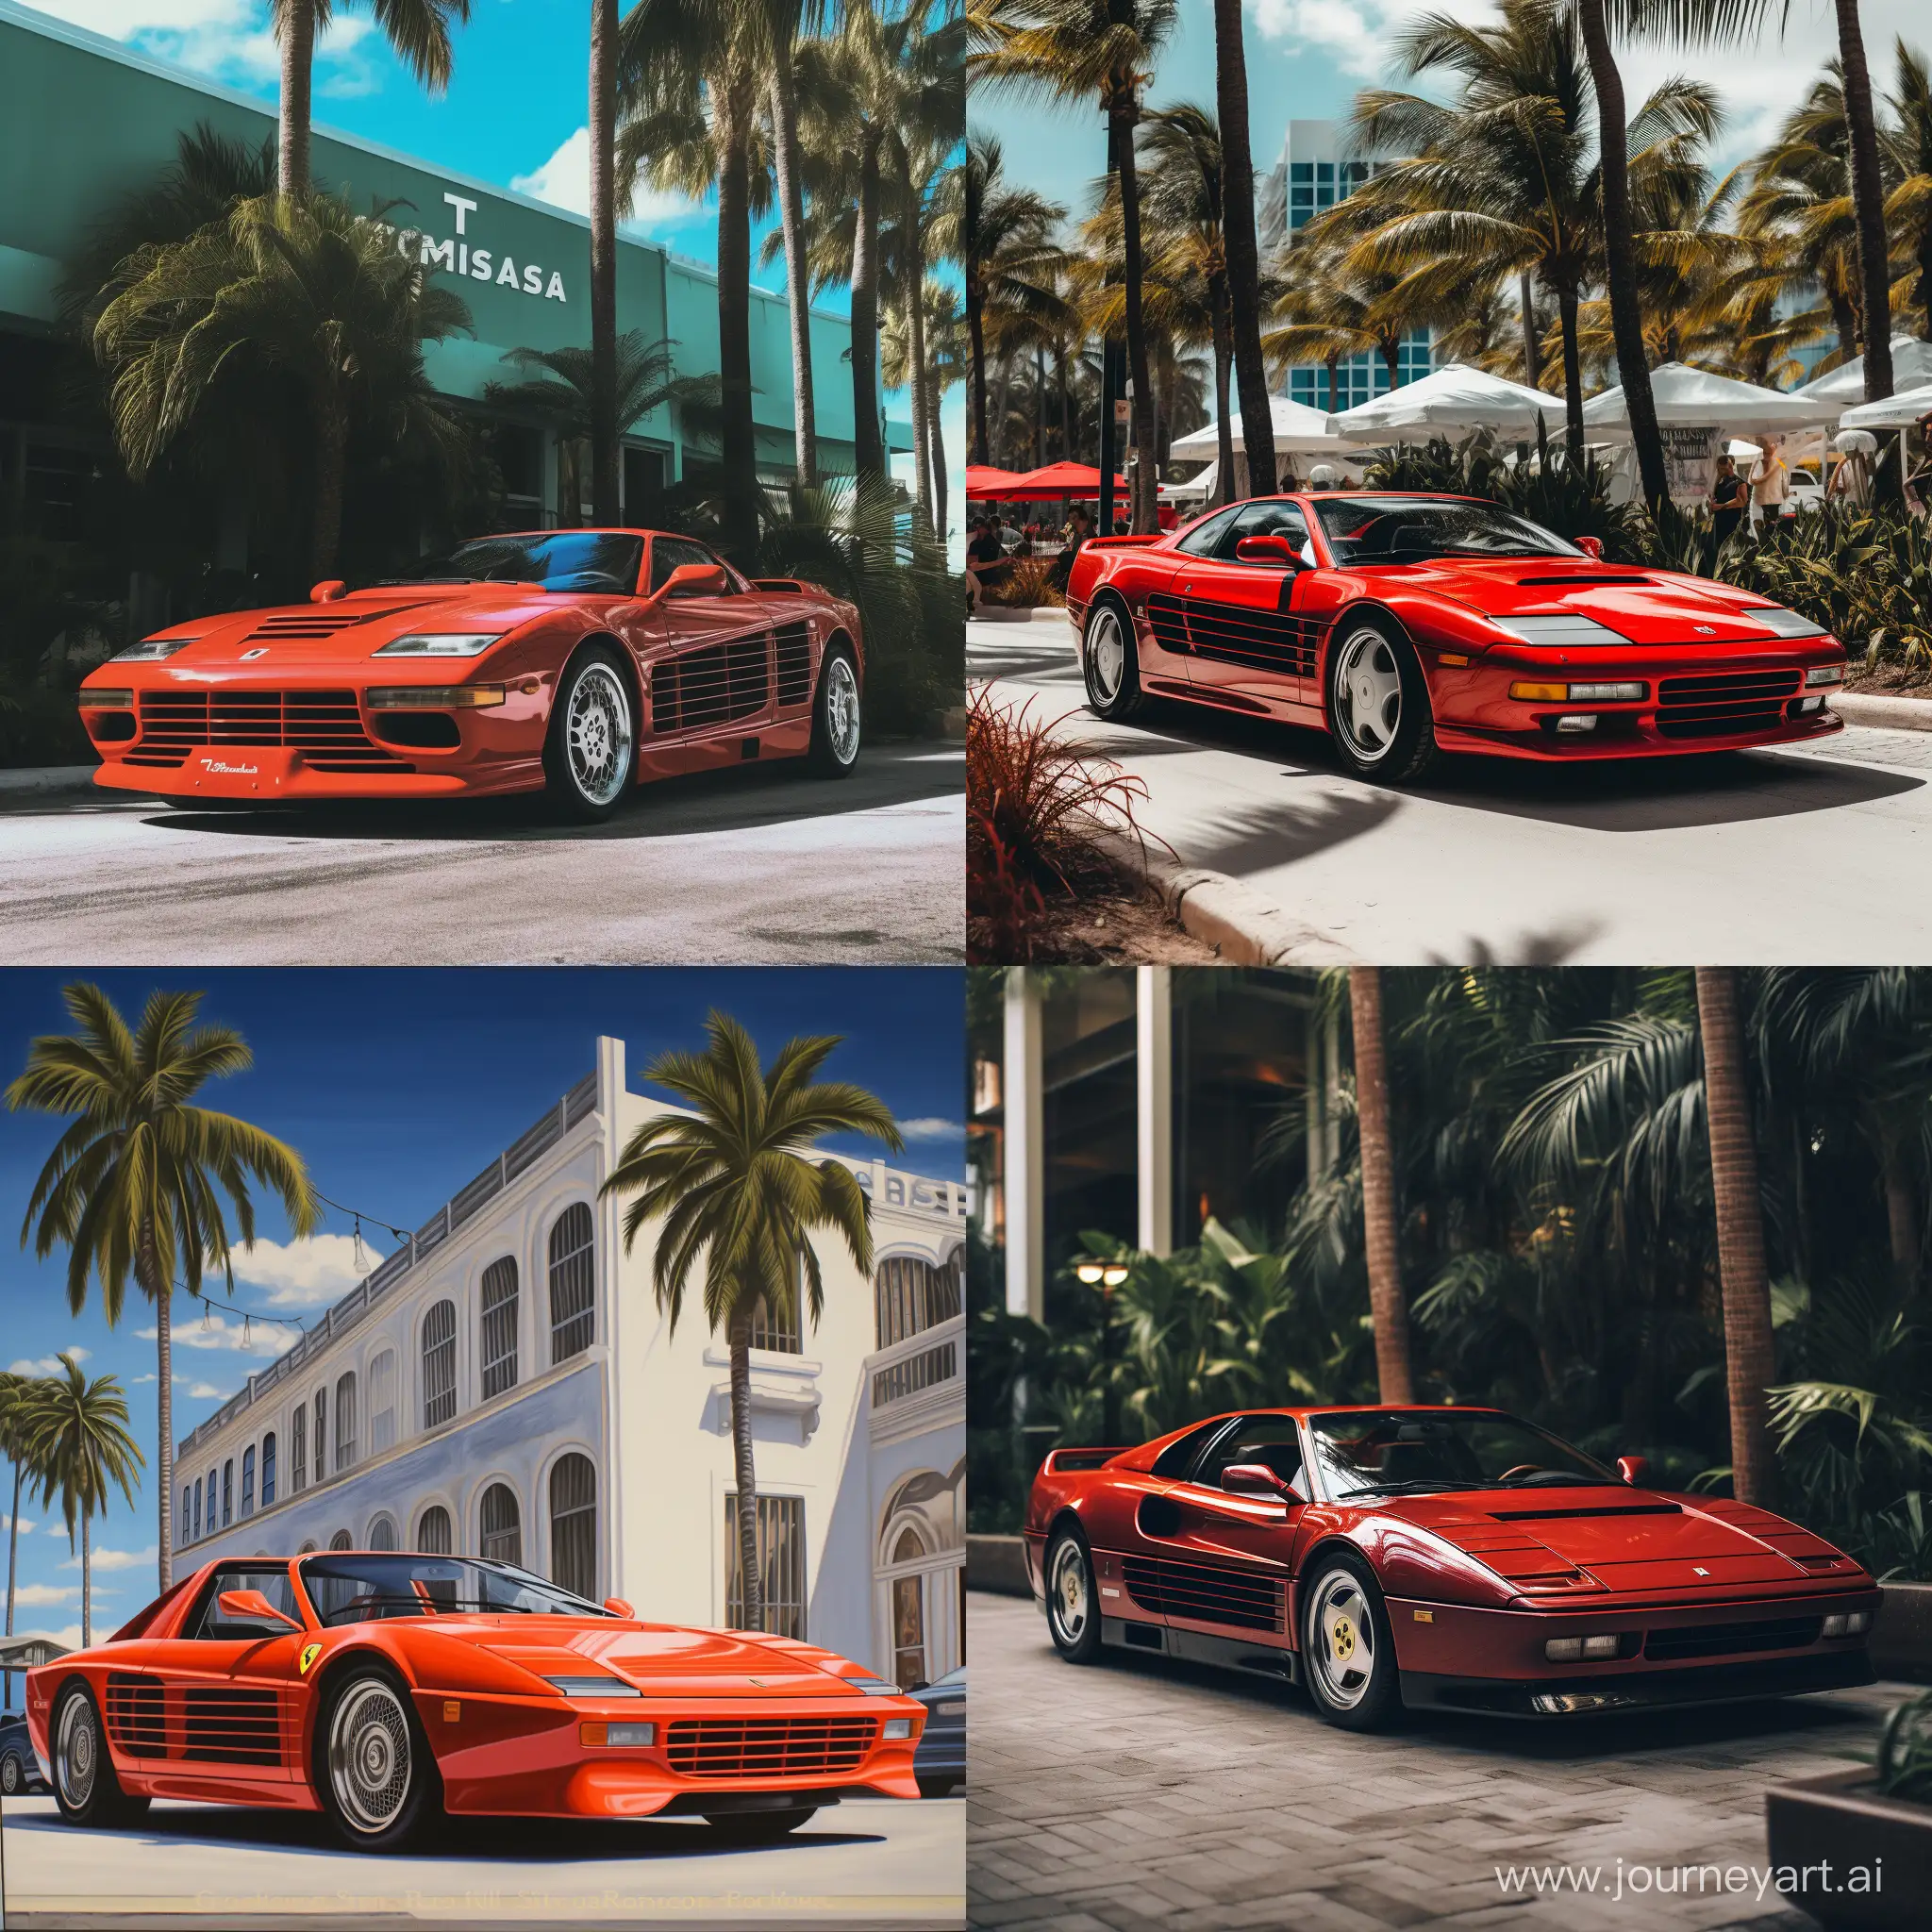 Vibrant-Red-Testarossa-Sports-Car-Driving-Through-Miami-Streets